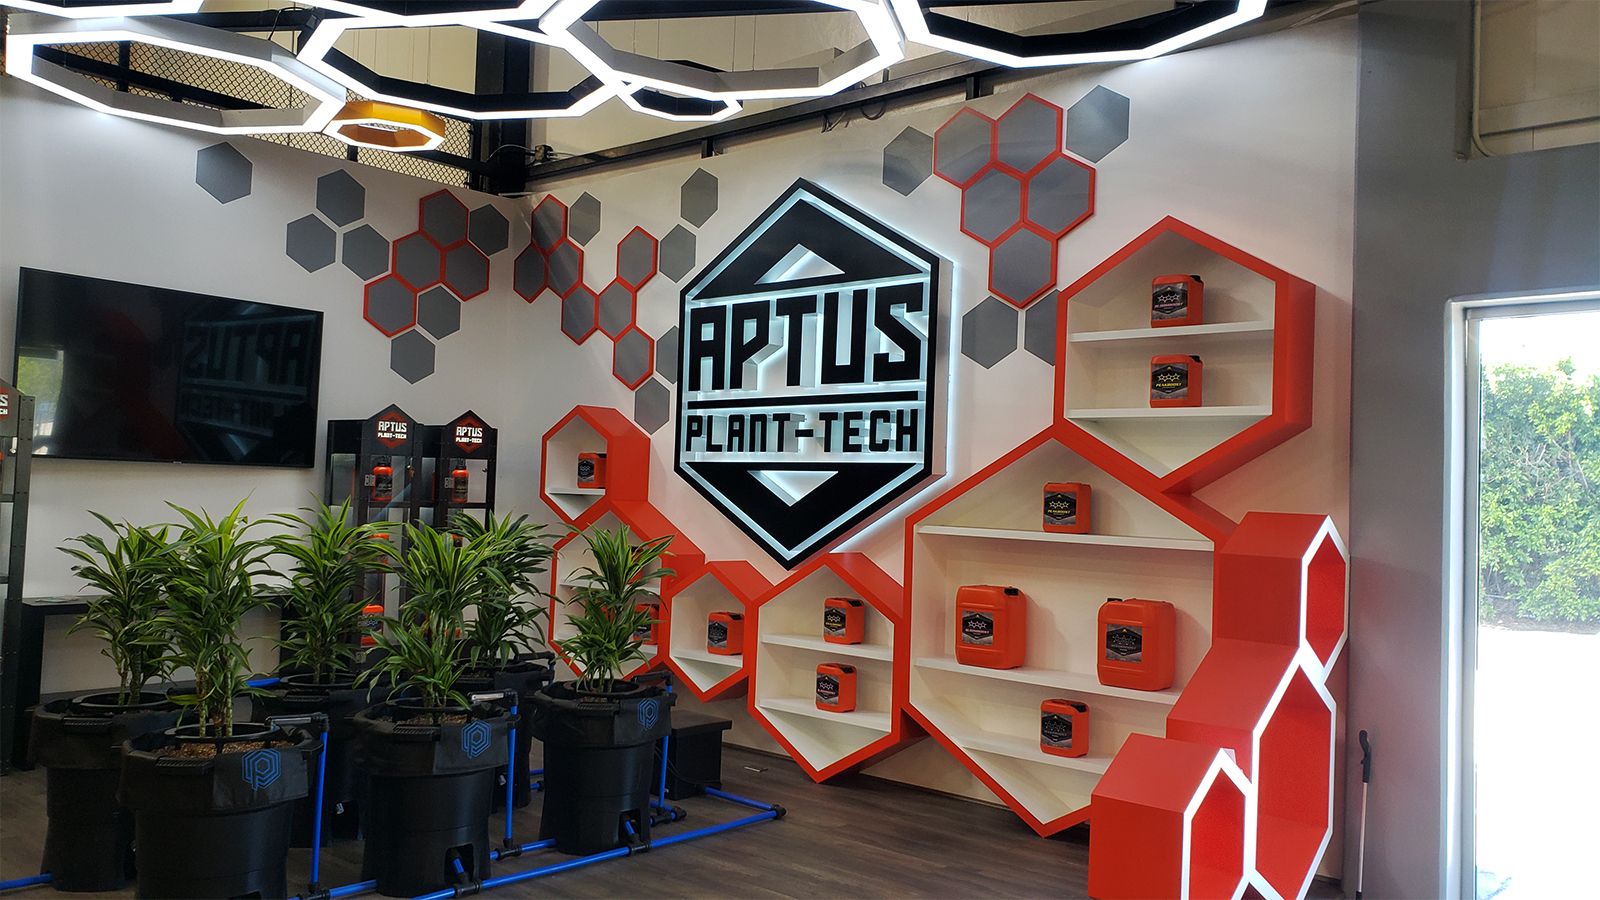 Aptus plant-tech indoor led sign